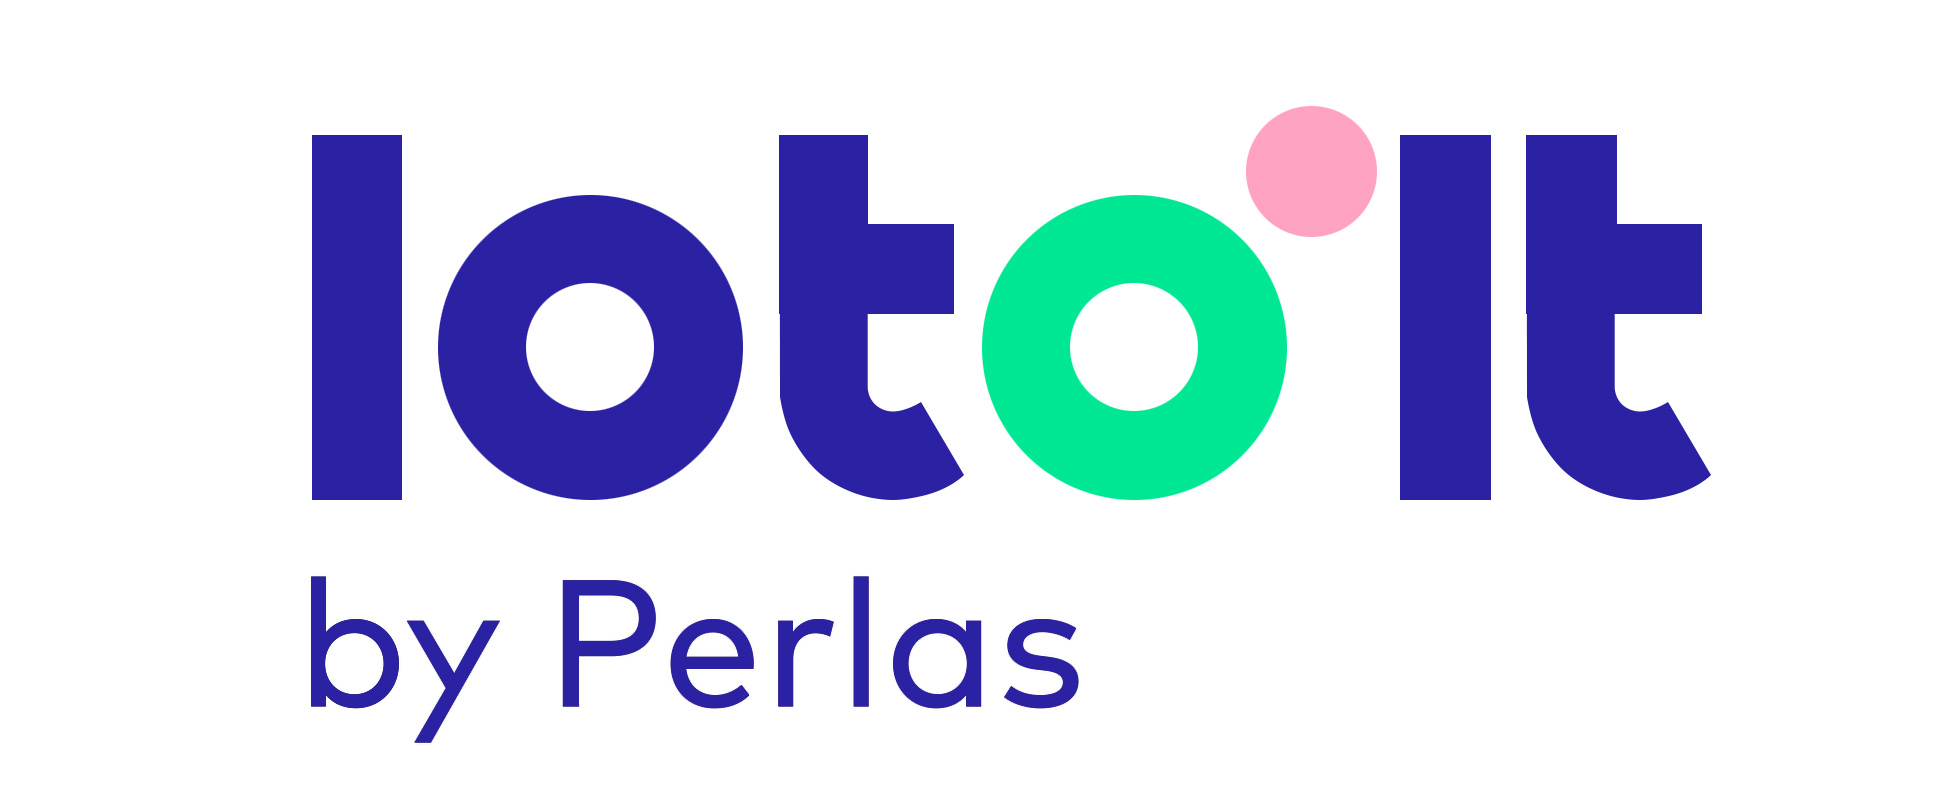 loto by perlas logo